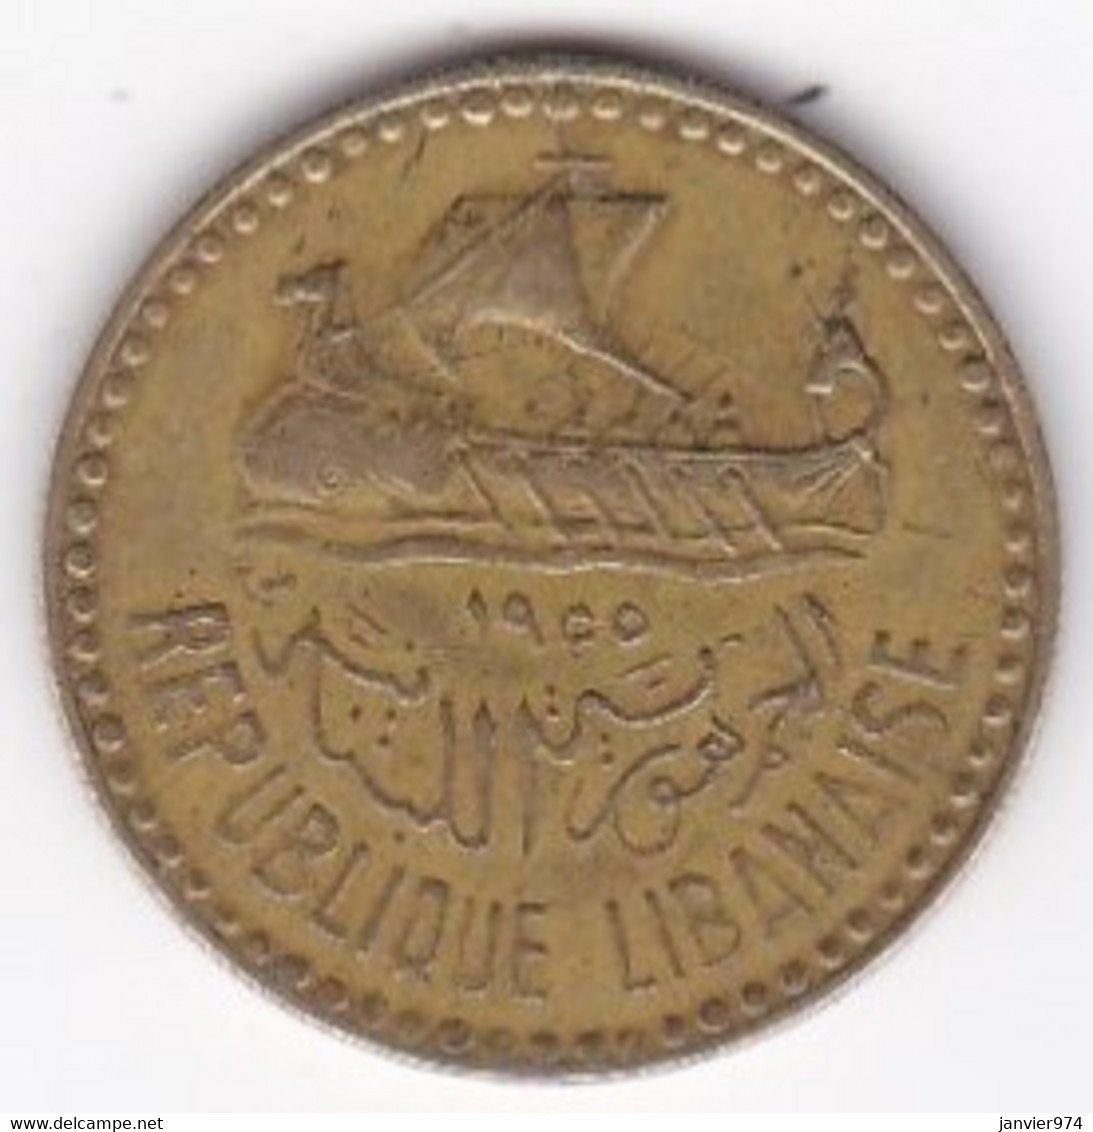 Liban 10 Piastres 1955 Bronze-aluminium , KM# 23 - Libano